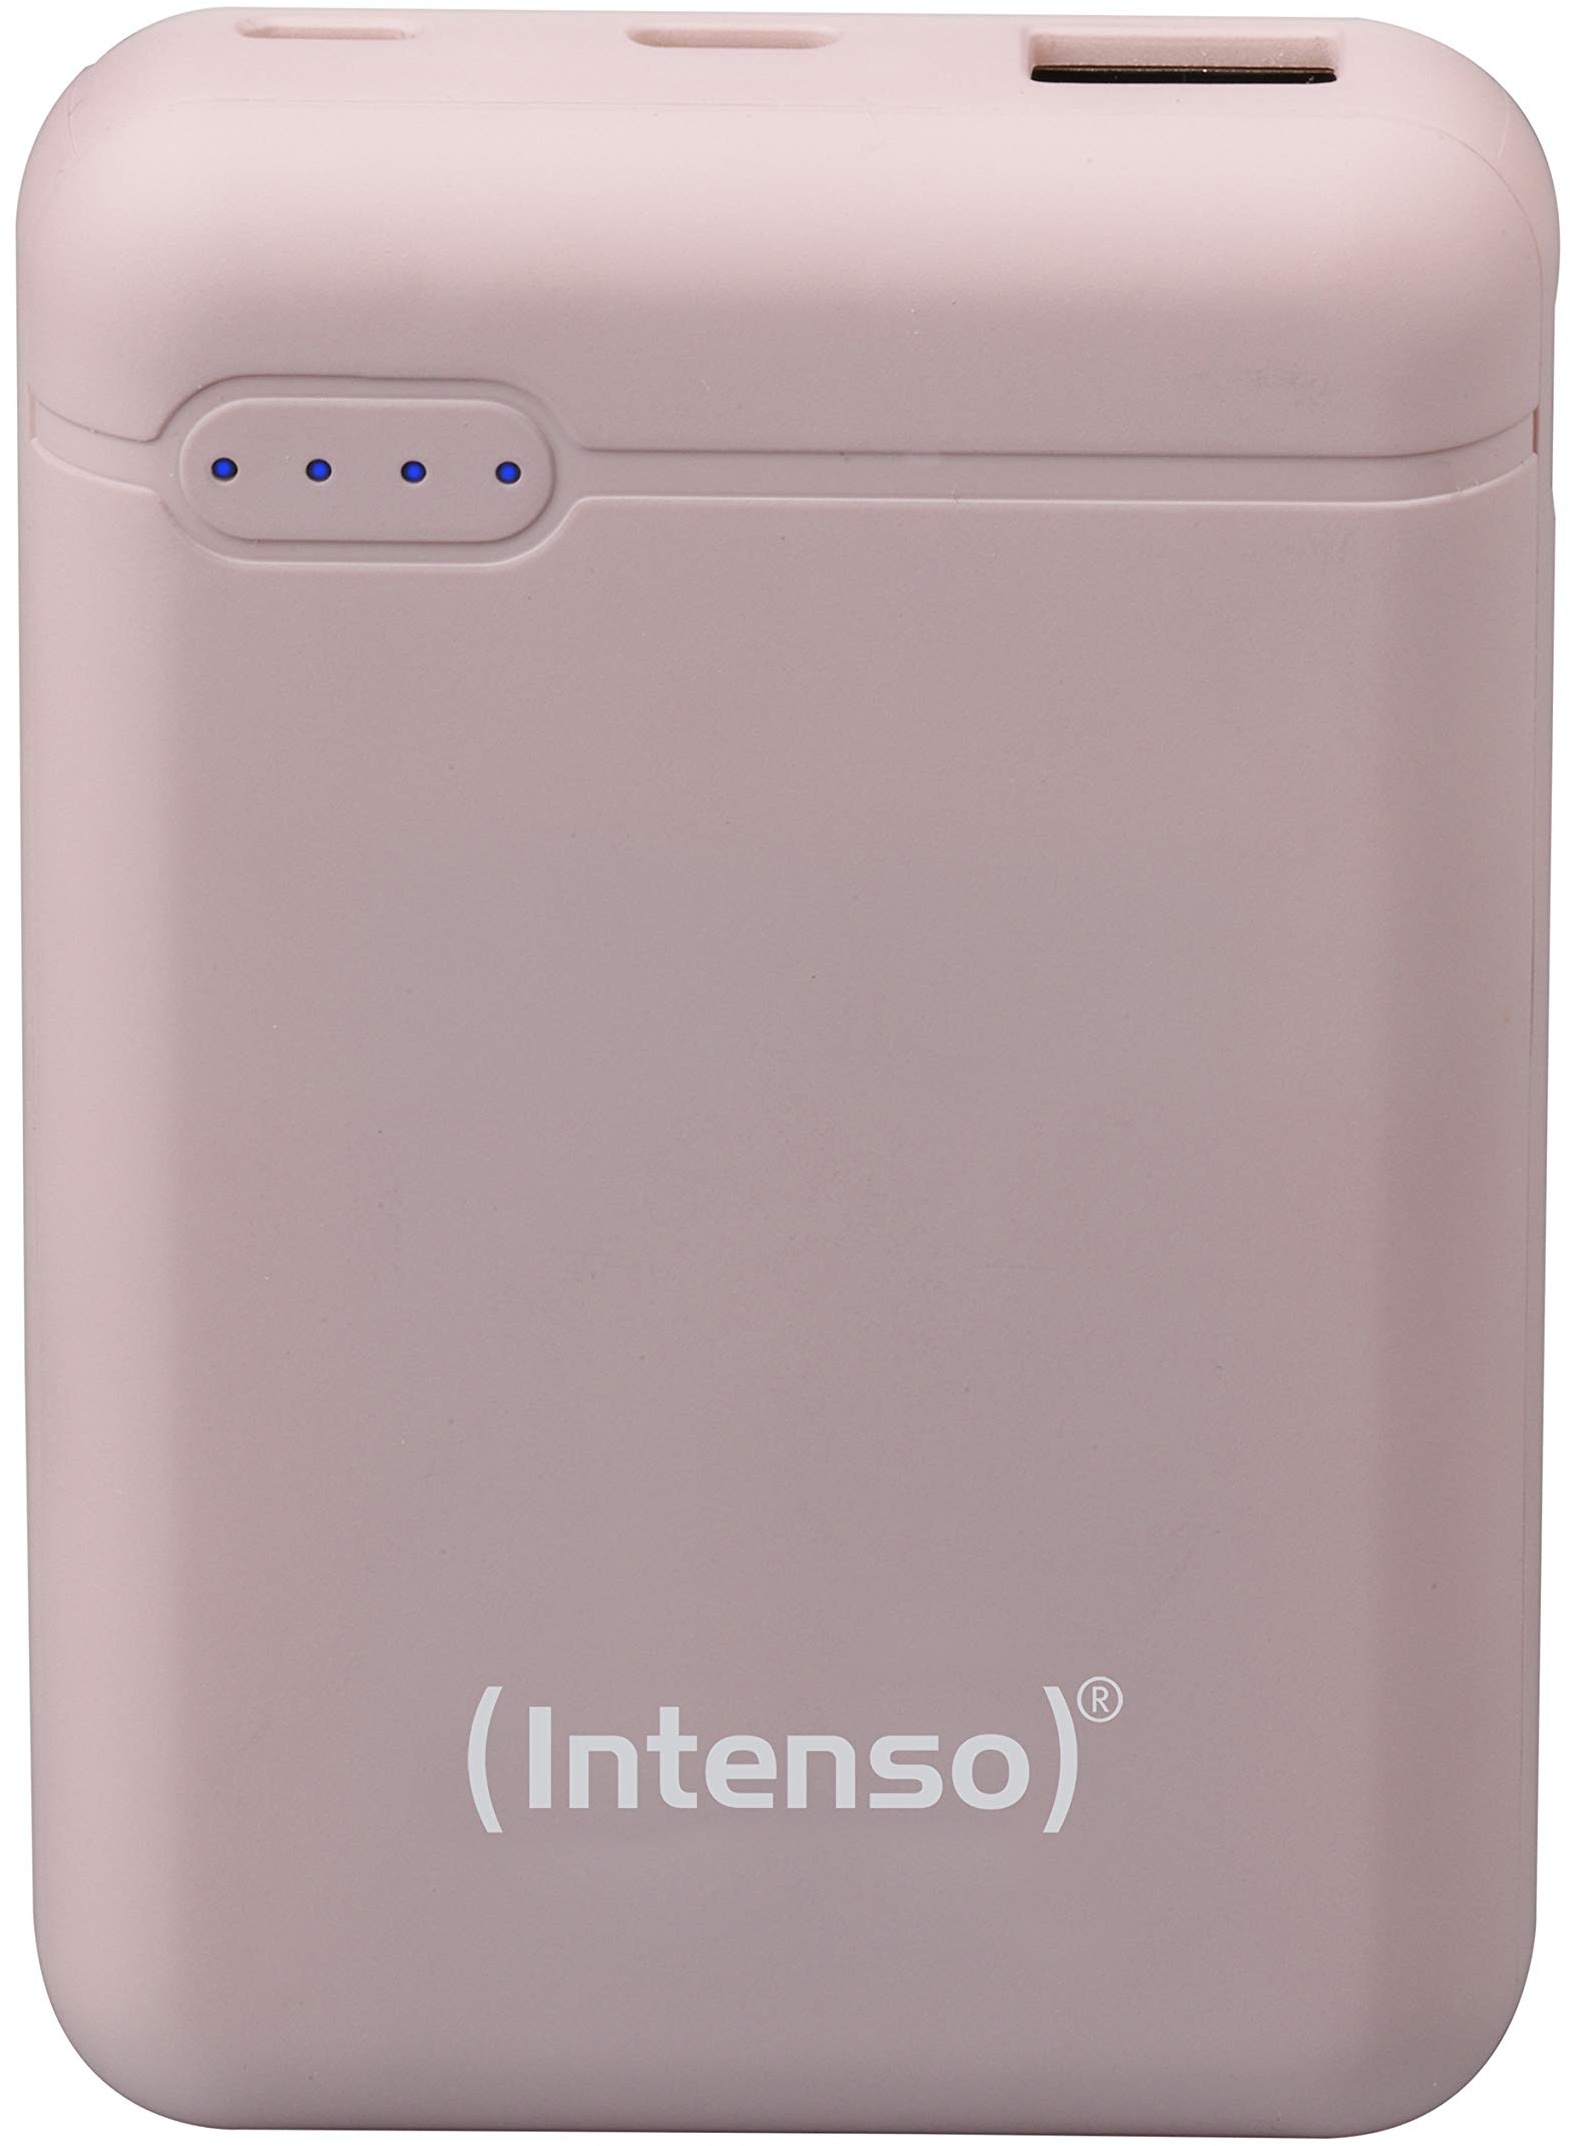 Intenso 7313533 Powerbank XS 10000, externes Ladegerät (10000mAh, geeignet für Smartphone/Tablet PC/MP3 Player/Digitalkamera) Rosé